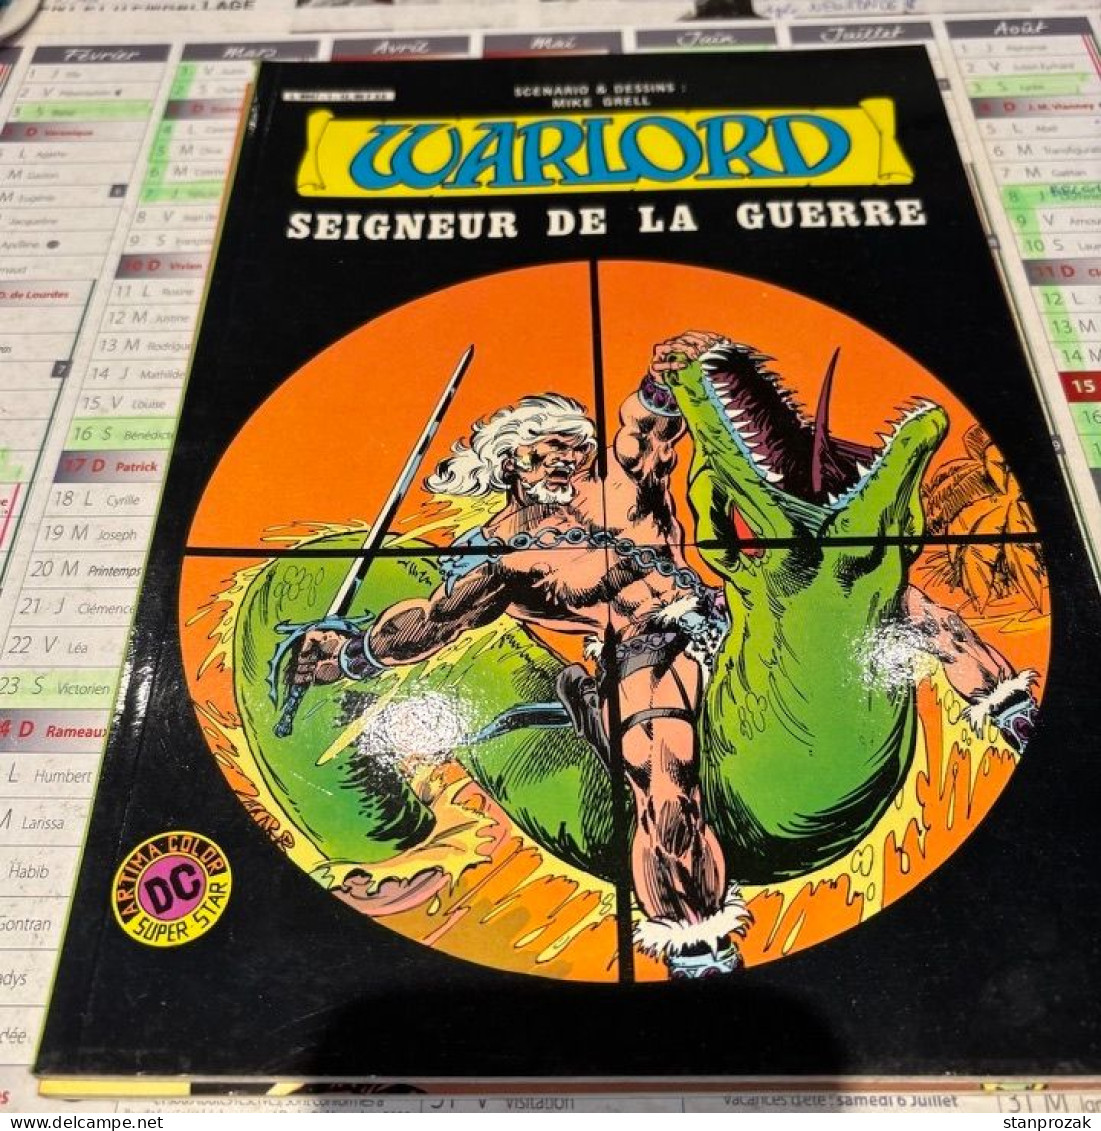 Warlord Seigneur De La Guerre - Original Edition - French